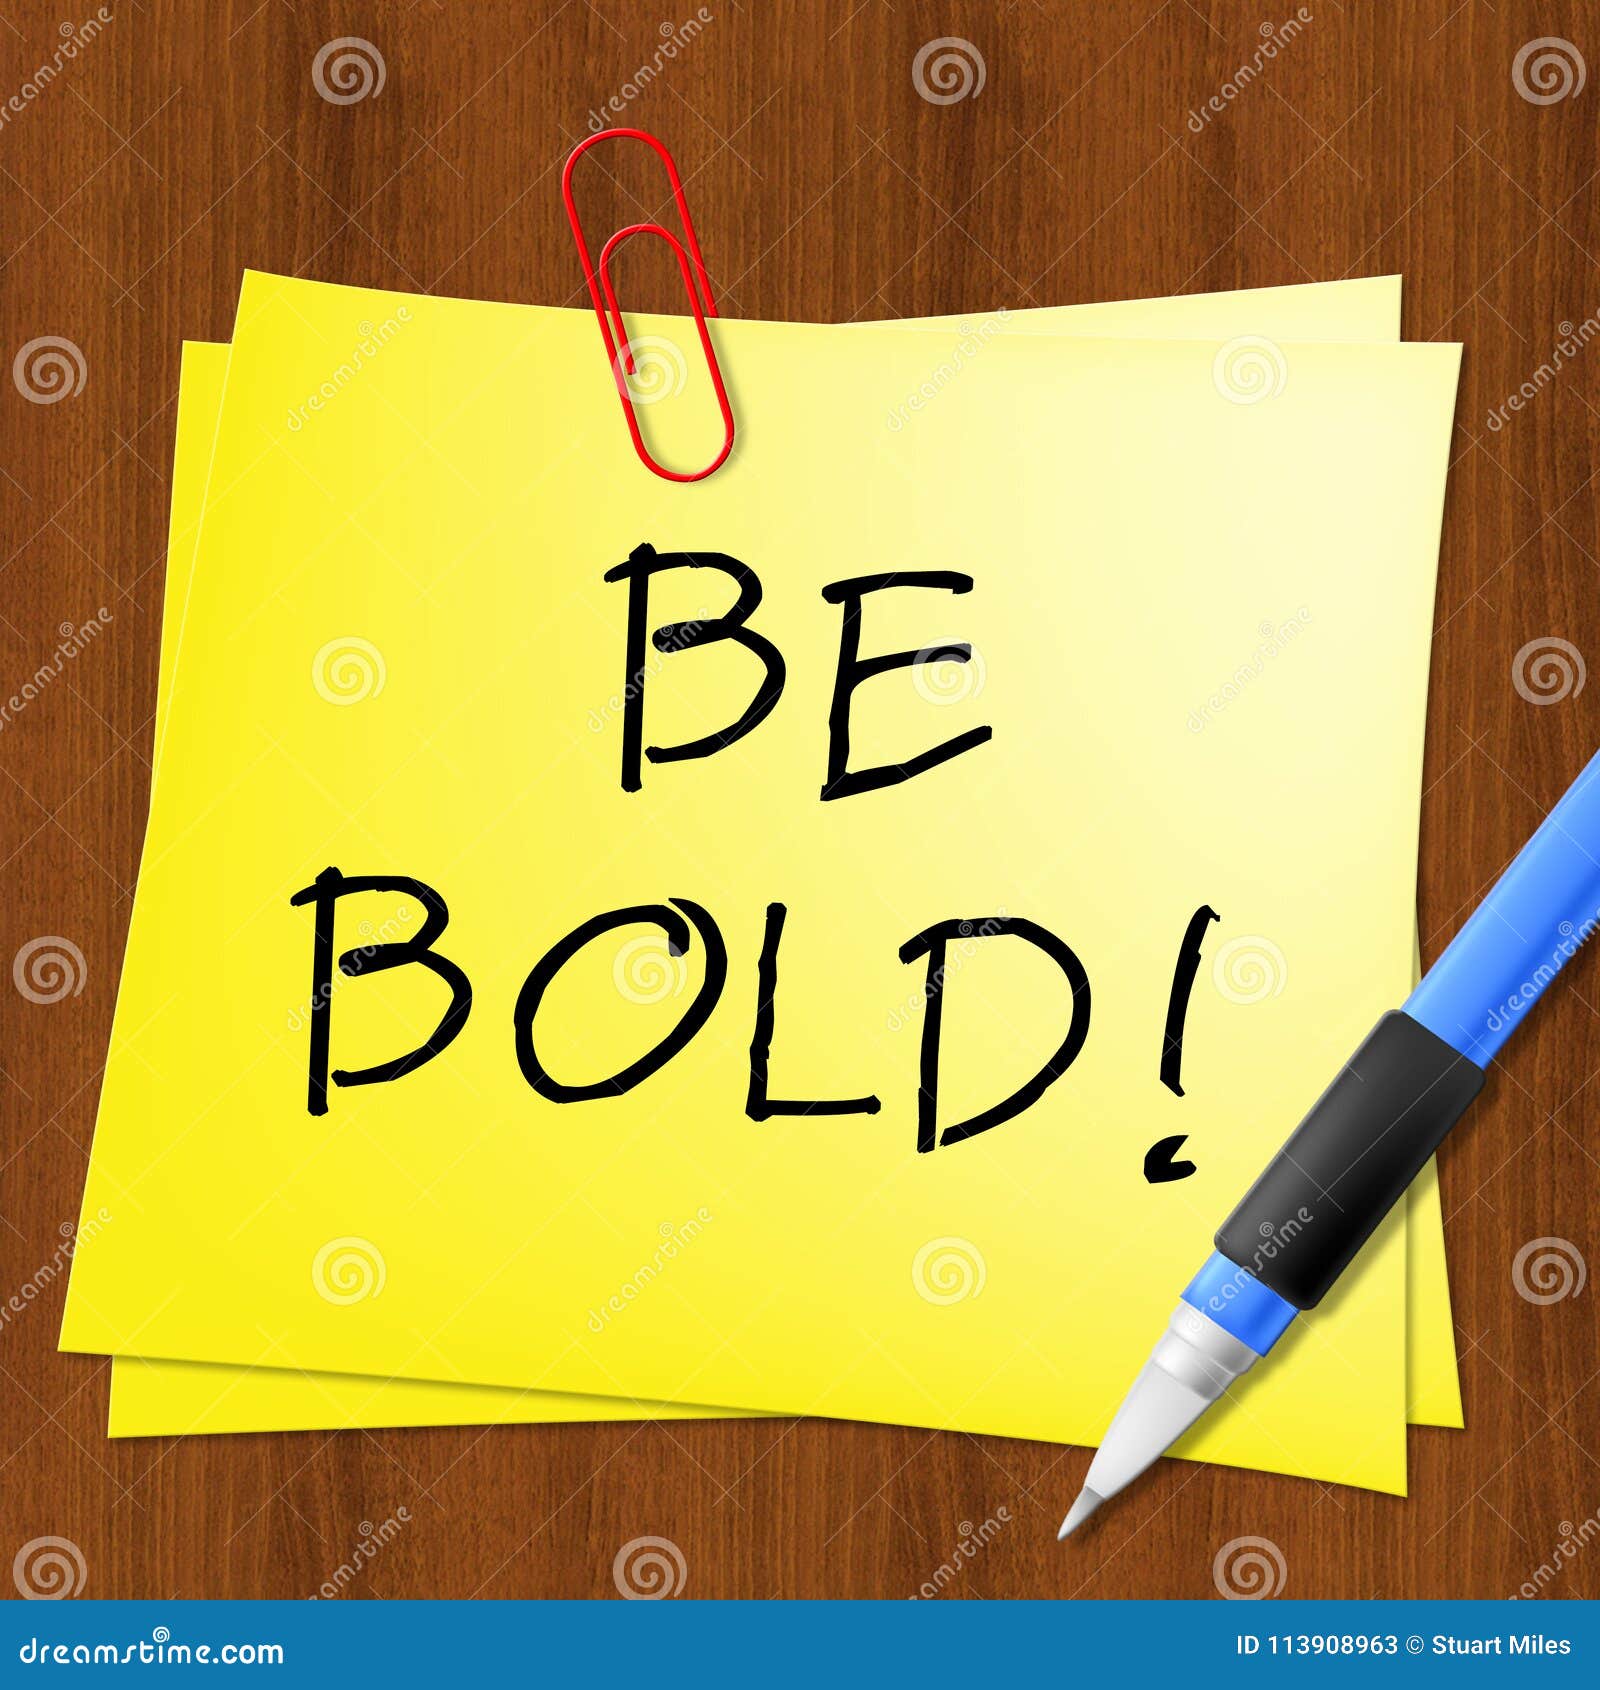 be bold message represents daring 3d 